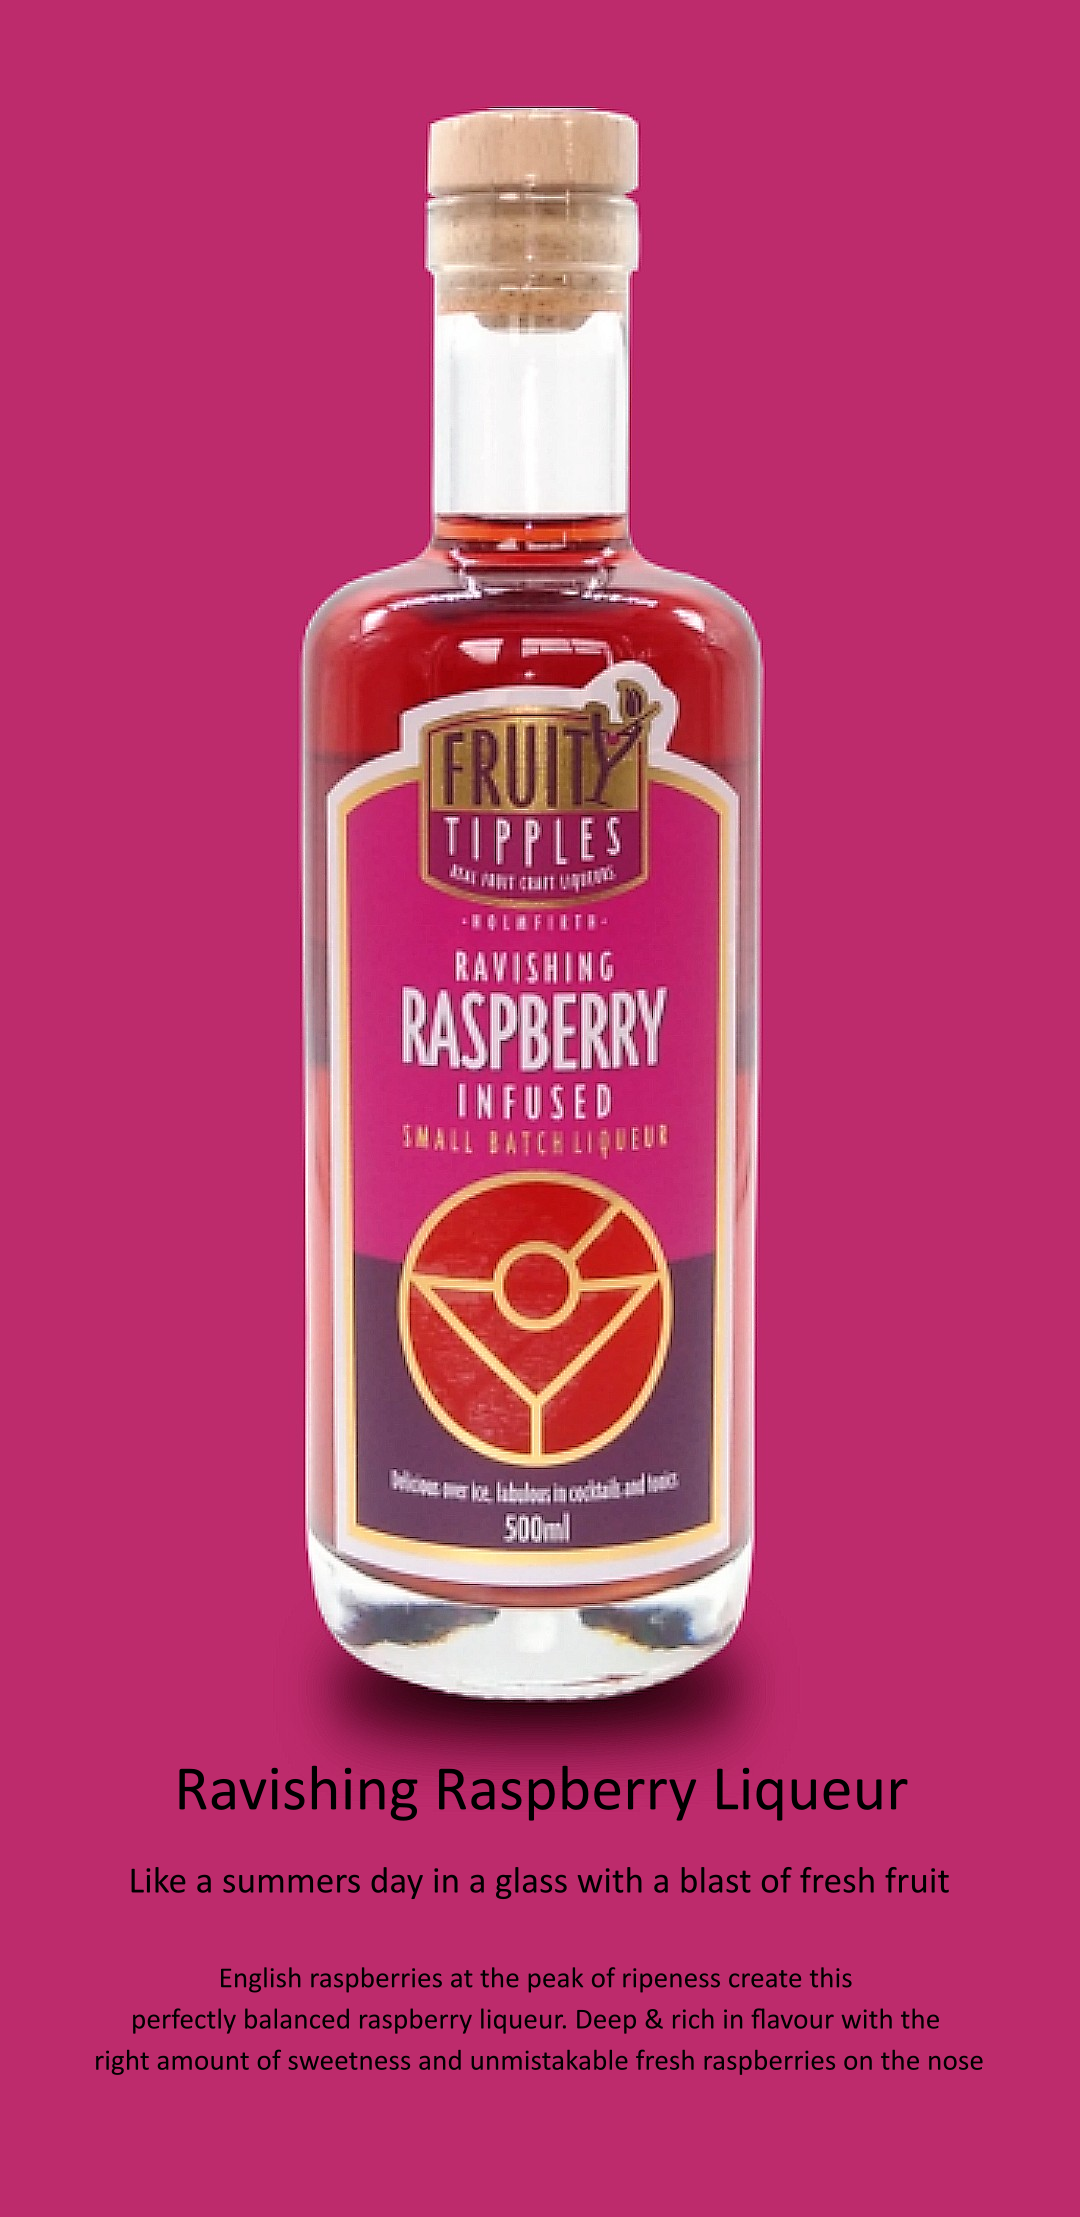 Raspberry Liqueur by Fruity Tipples